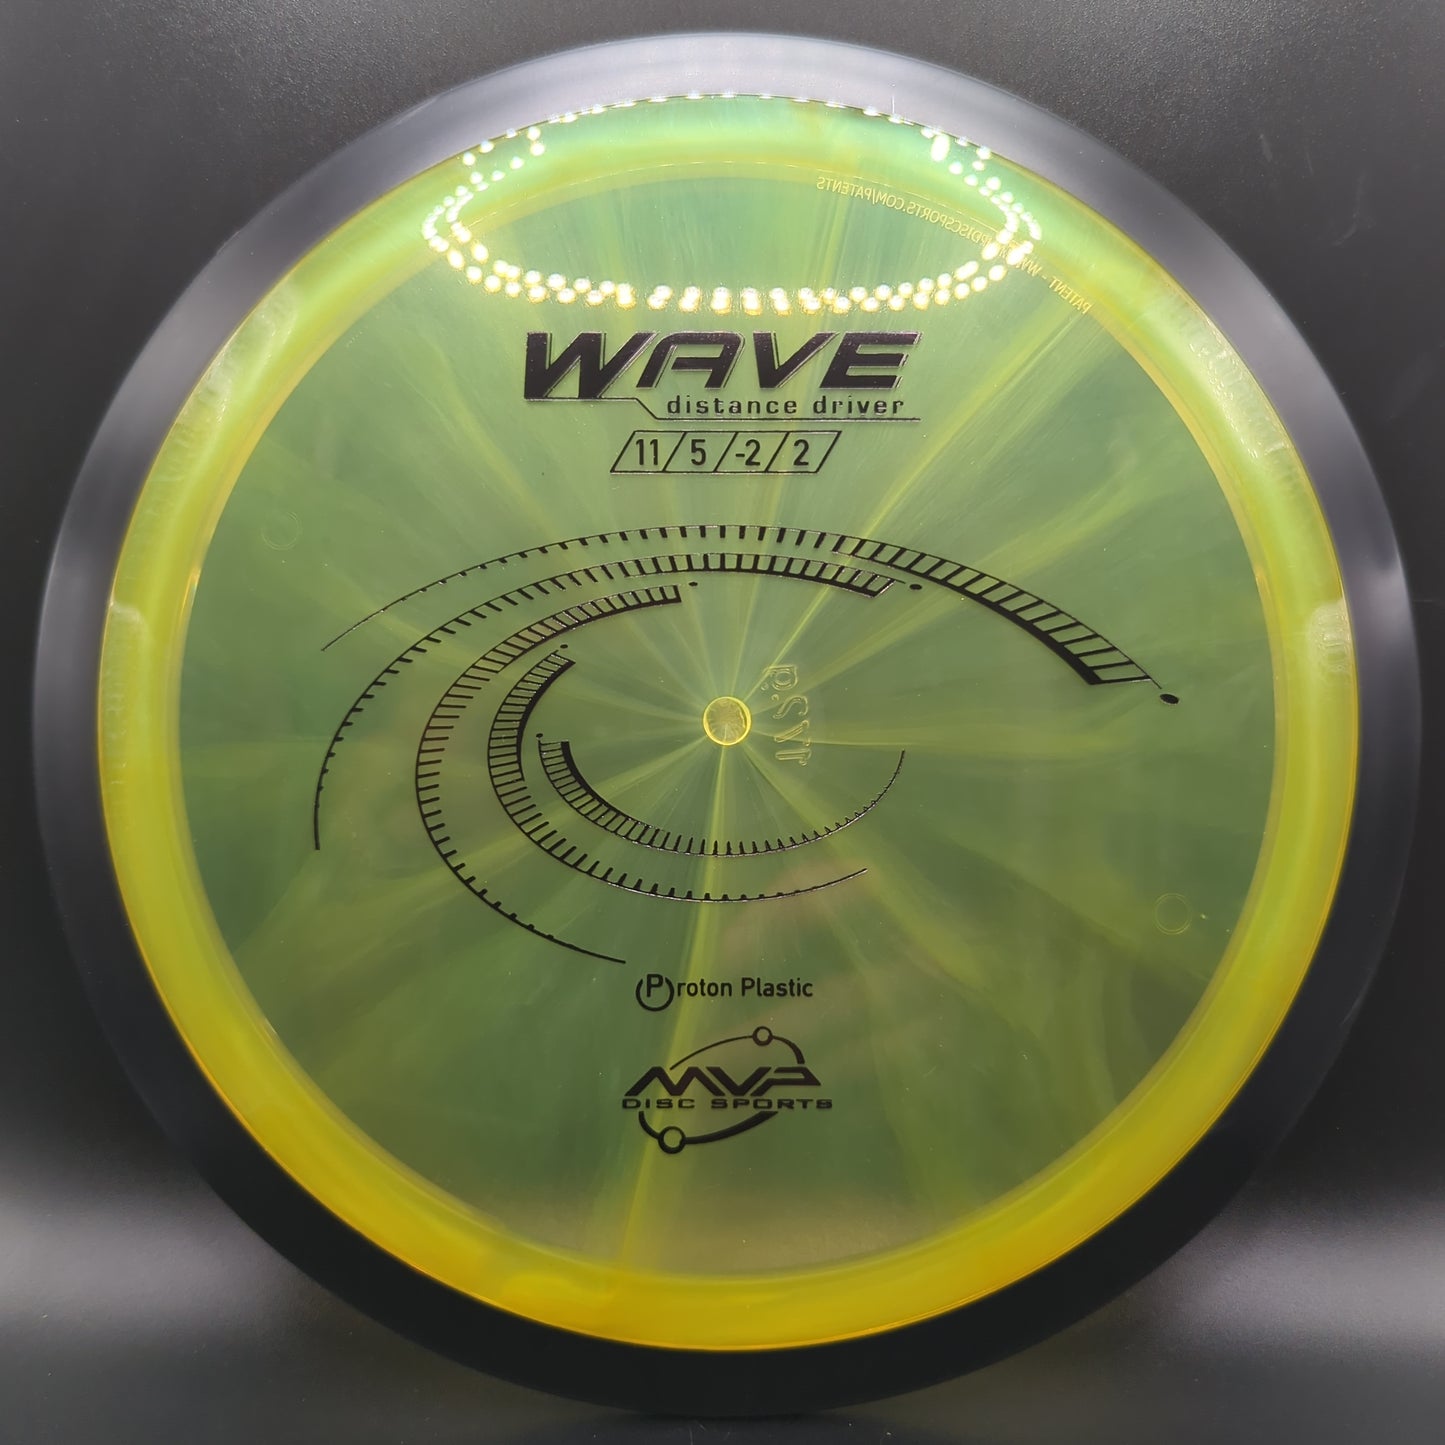 MVP Proton Wave